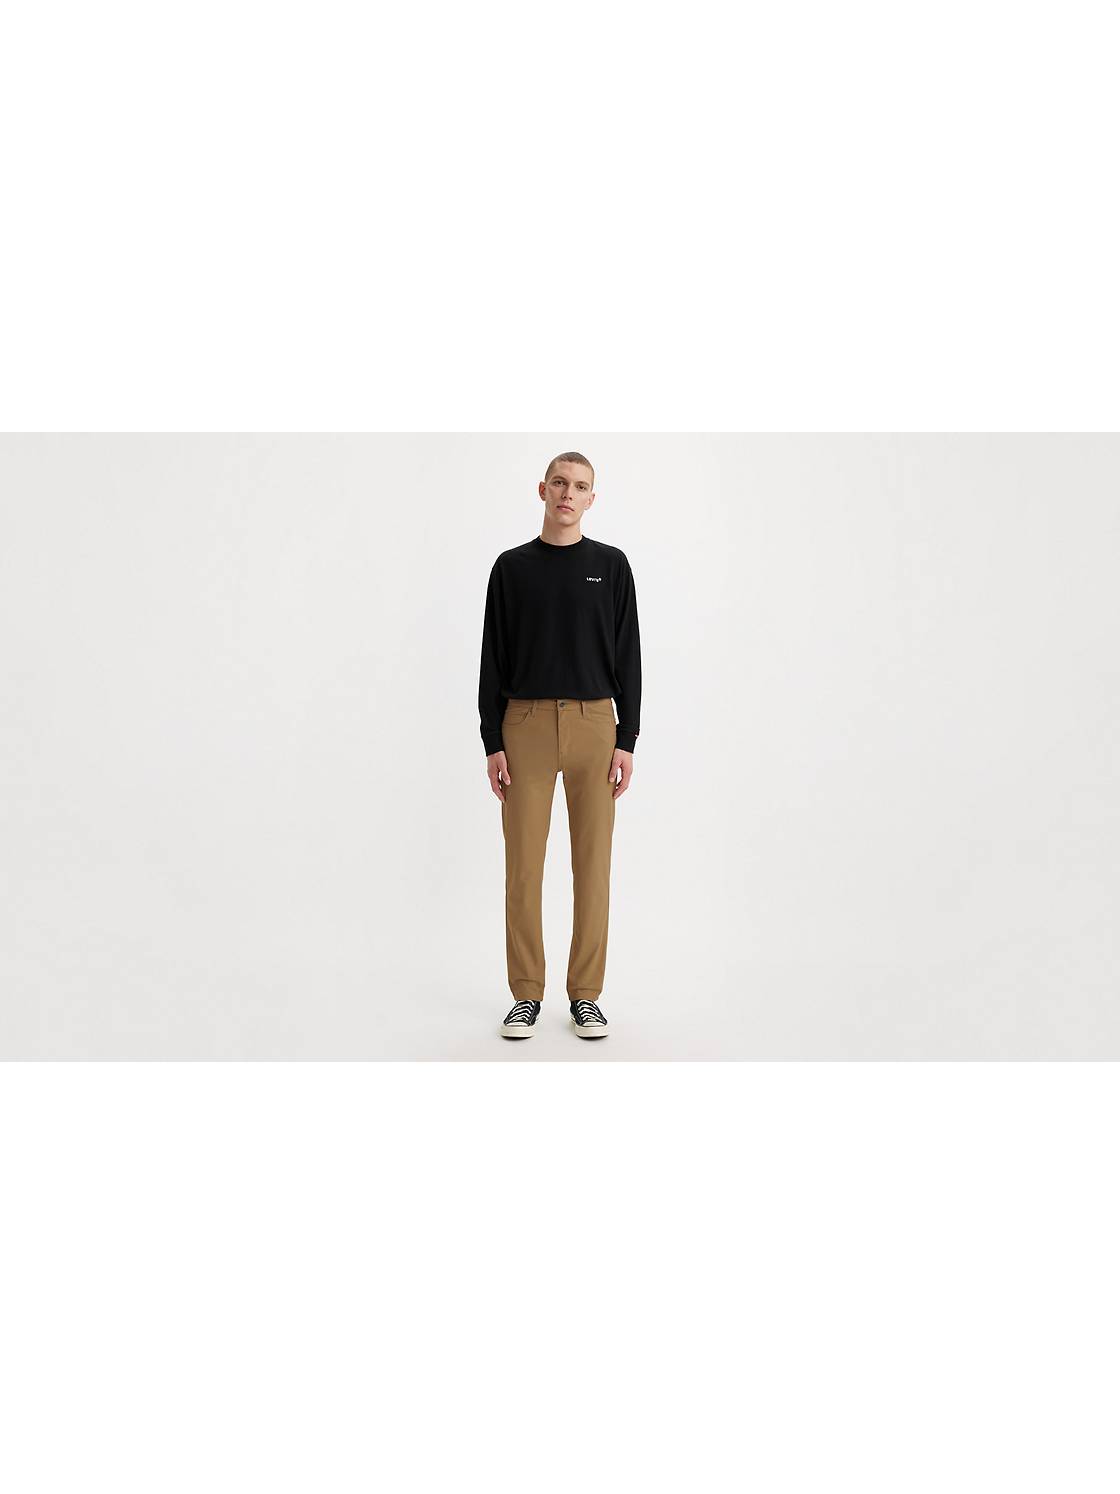 Buy Dockers Men's Comfort Khaki Upgrade Relaxed Fit Pleat Pant, British  Khaki, 30x30 at